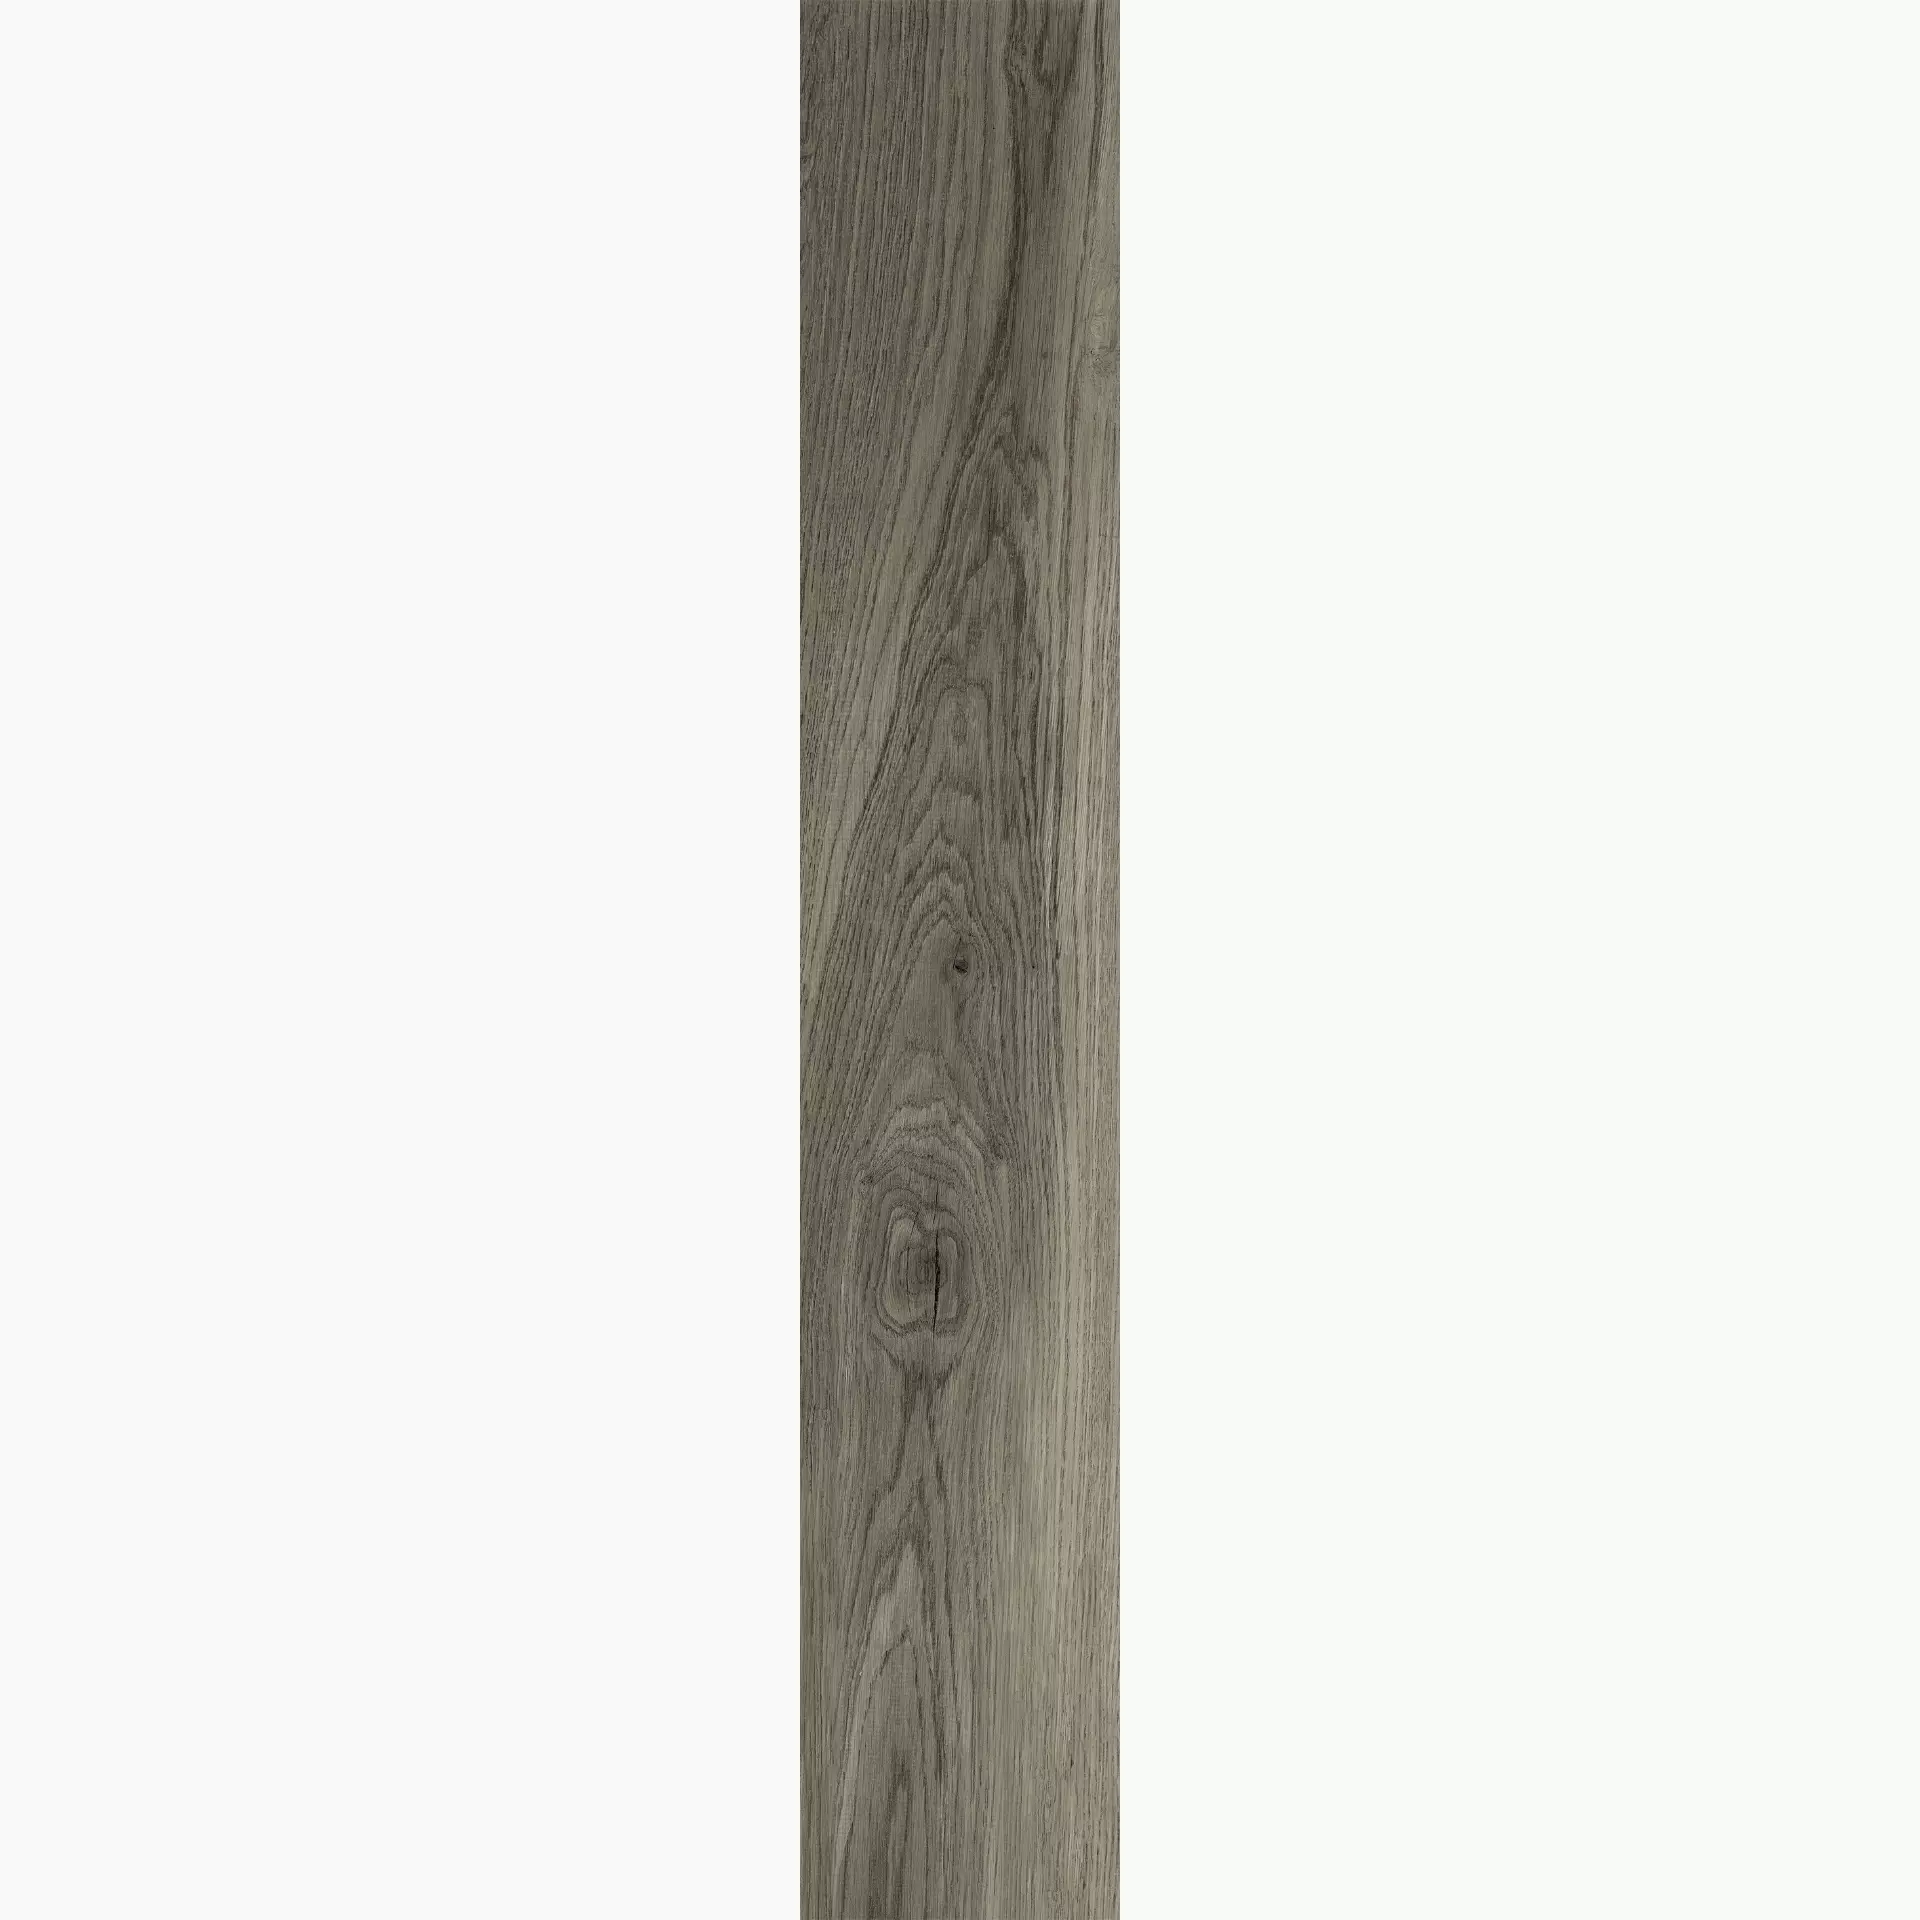 Florim Hi-Wood Of Cerim Dark Oak Naturale – Matt 759964 20x120cm rectified 9mm